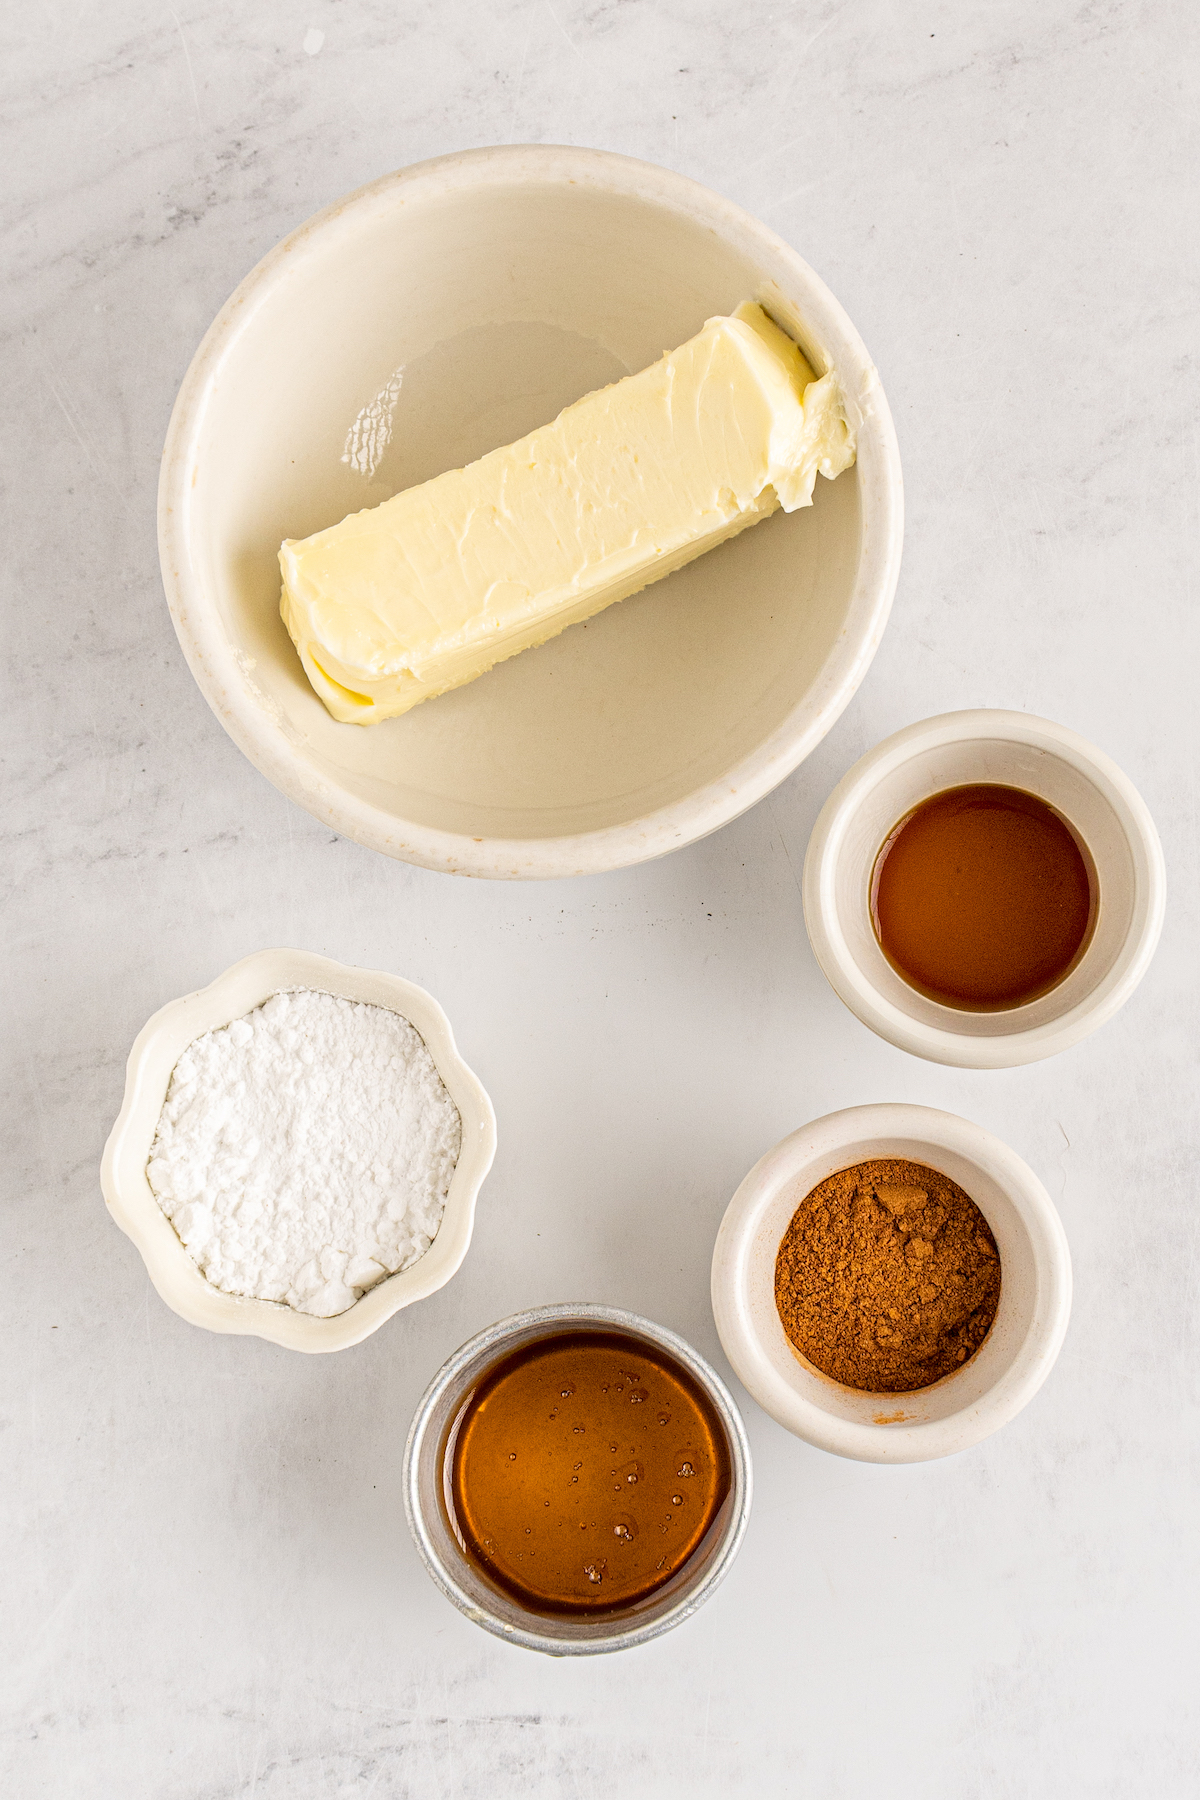 From top: Softened butter, vanilla, powdered sugar, honey, ground cinnamon.